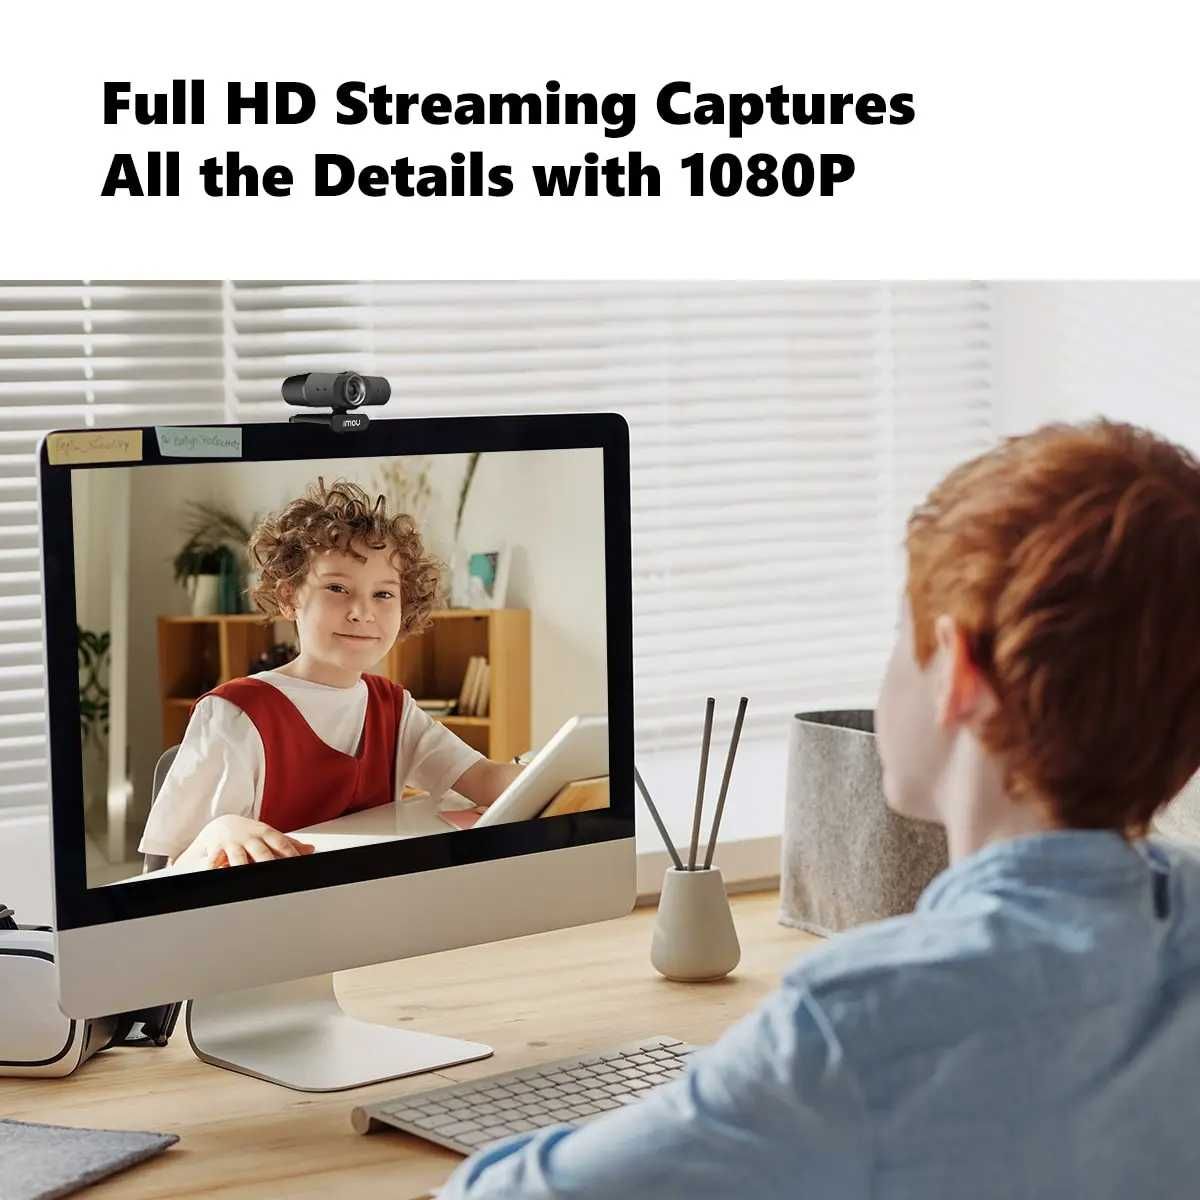 Camera web webcam Dahua Imou HTI-UC320, Full HD 1080p